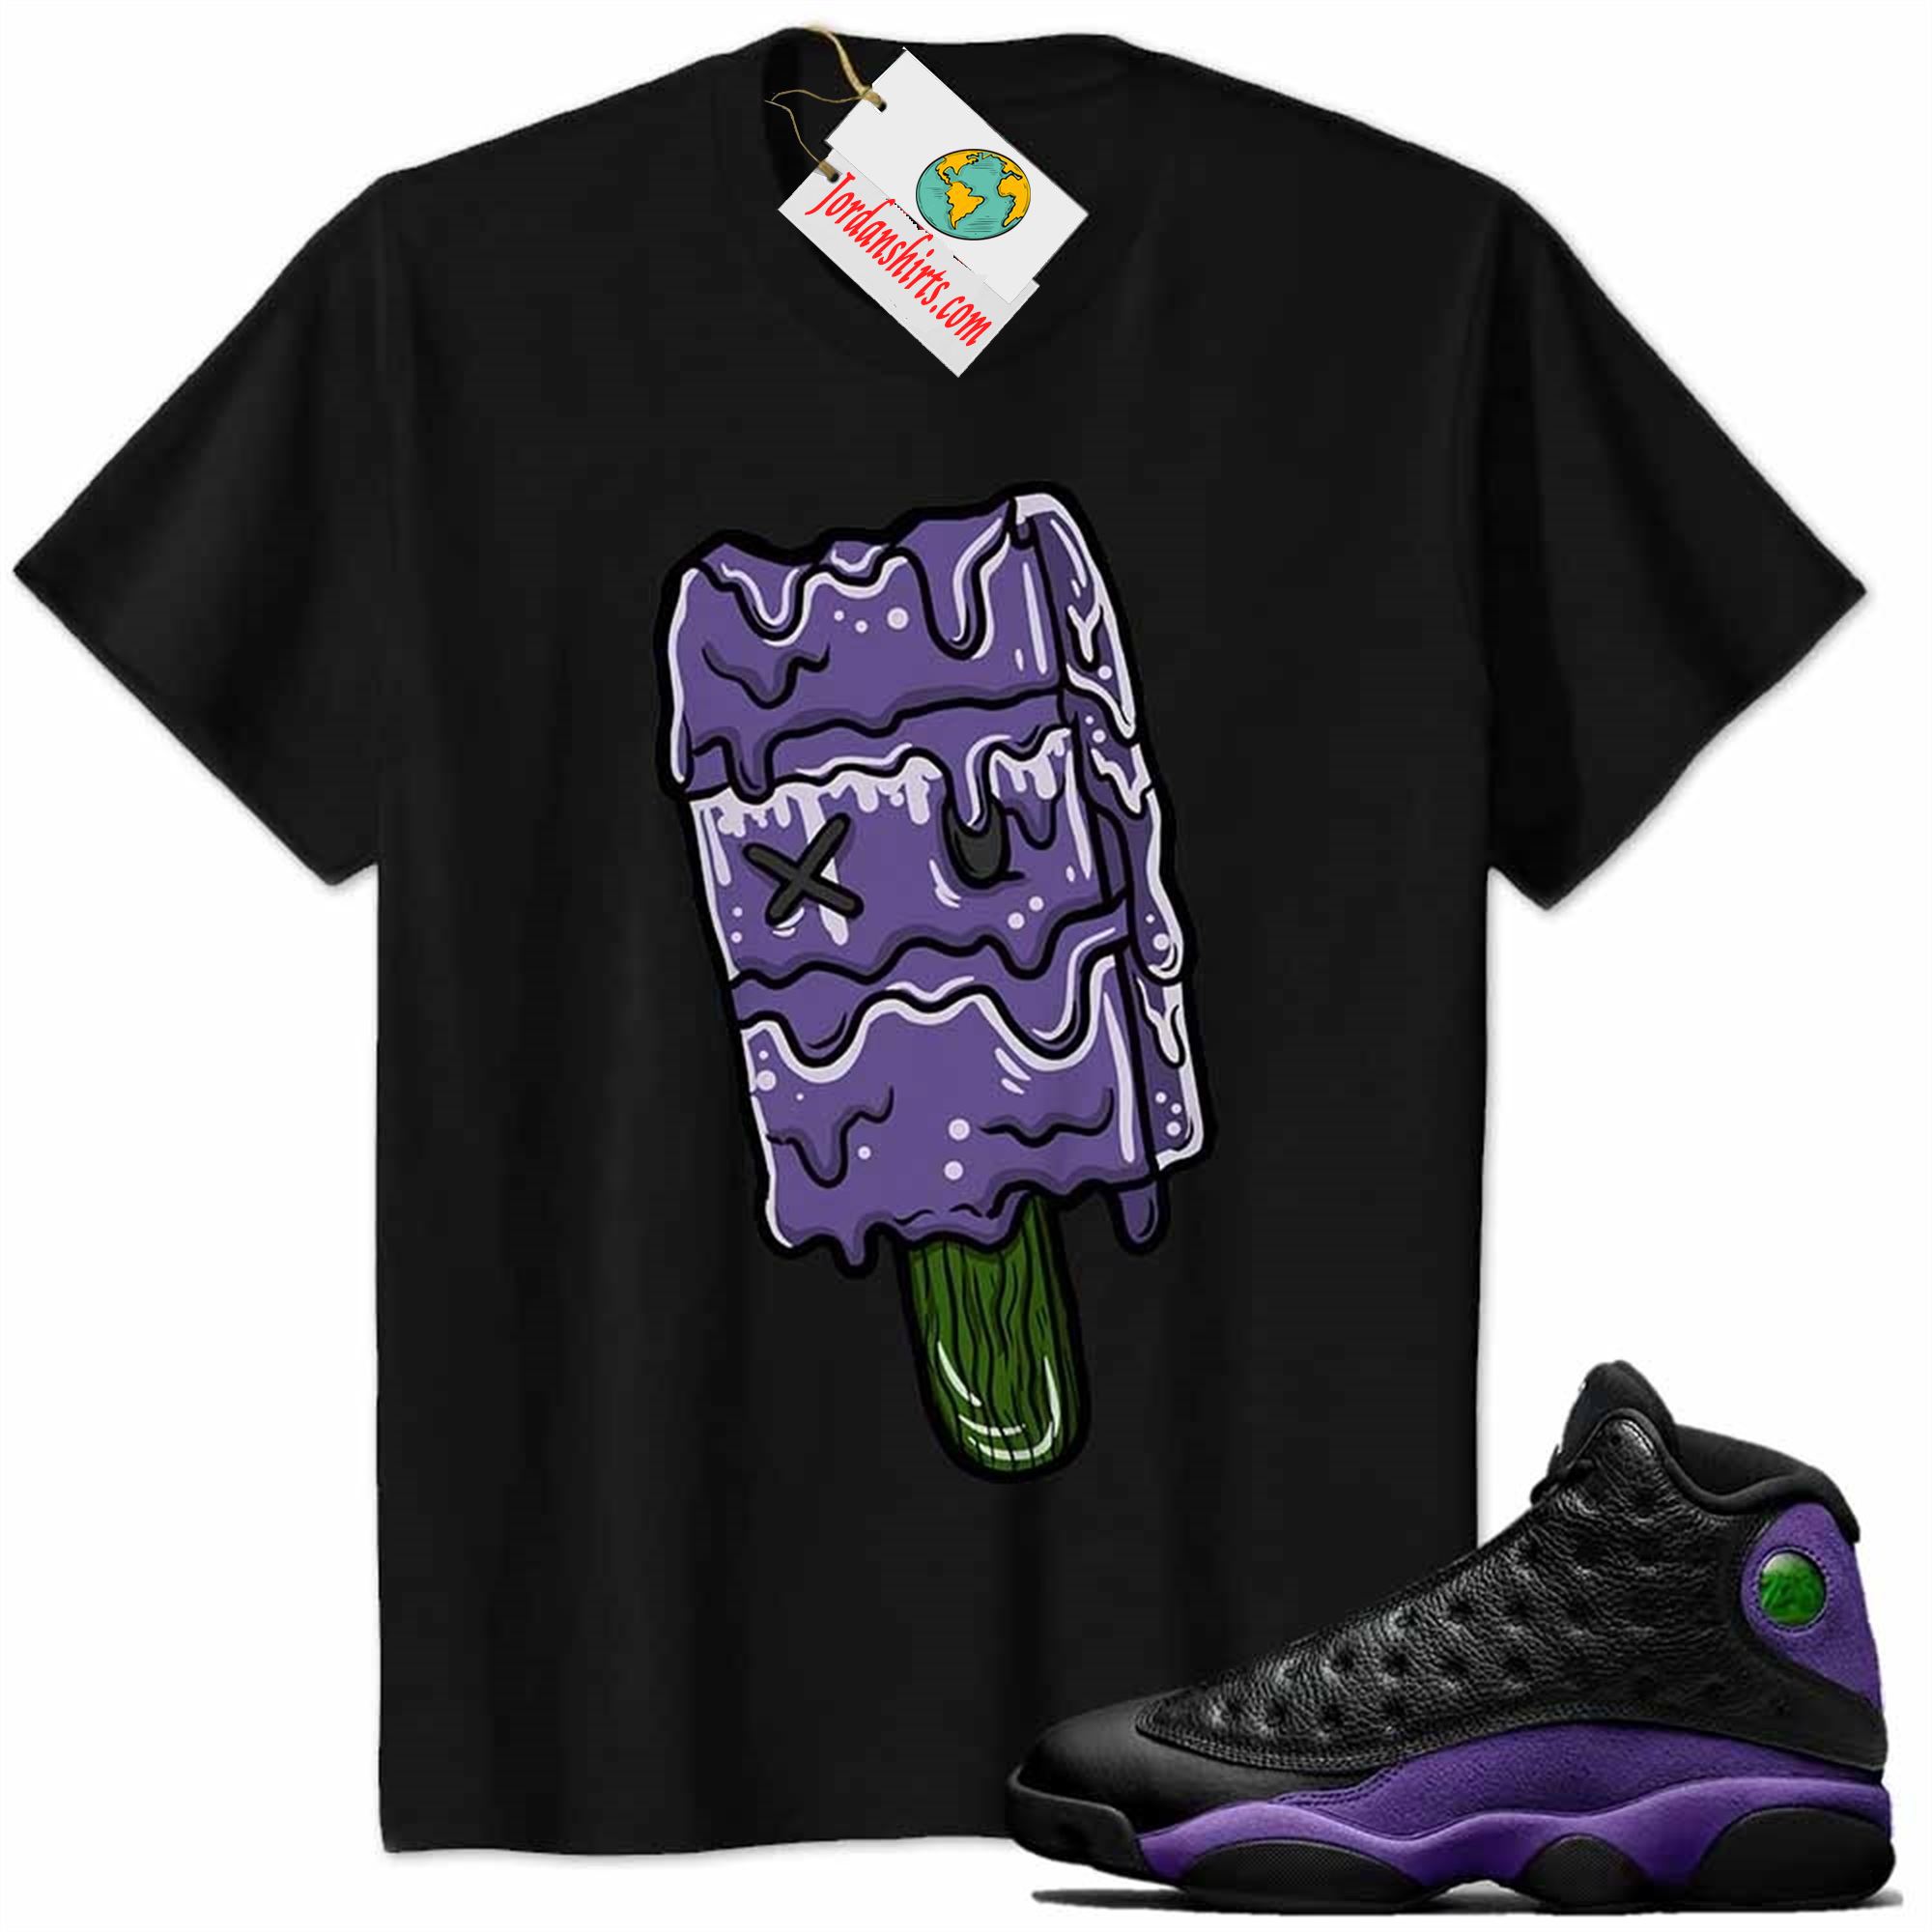 Jordan 13 Shirt, Ice Cream Dripping Black Air Jordan 13 Court Purple 13s Size Up To 5xl